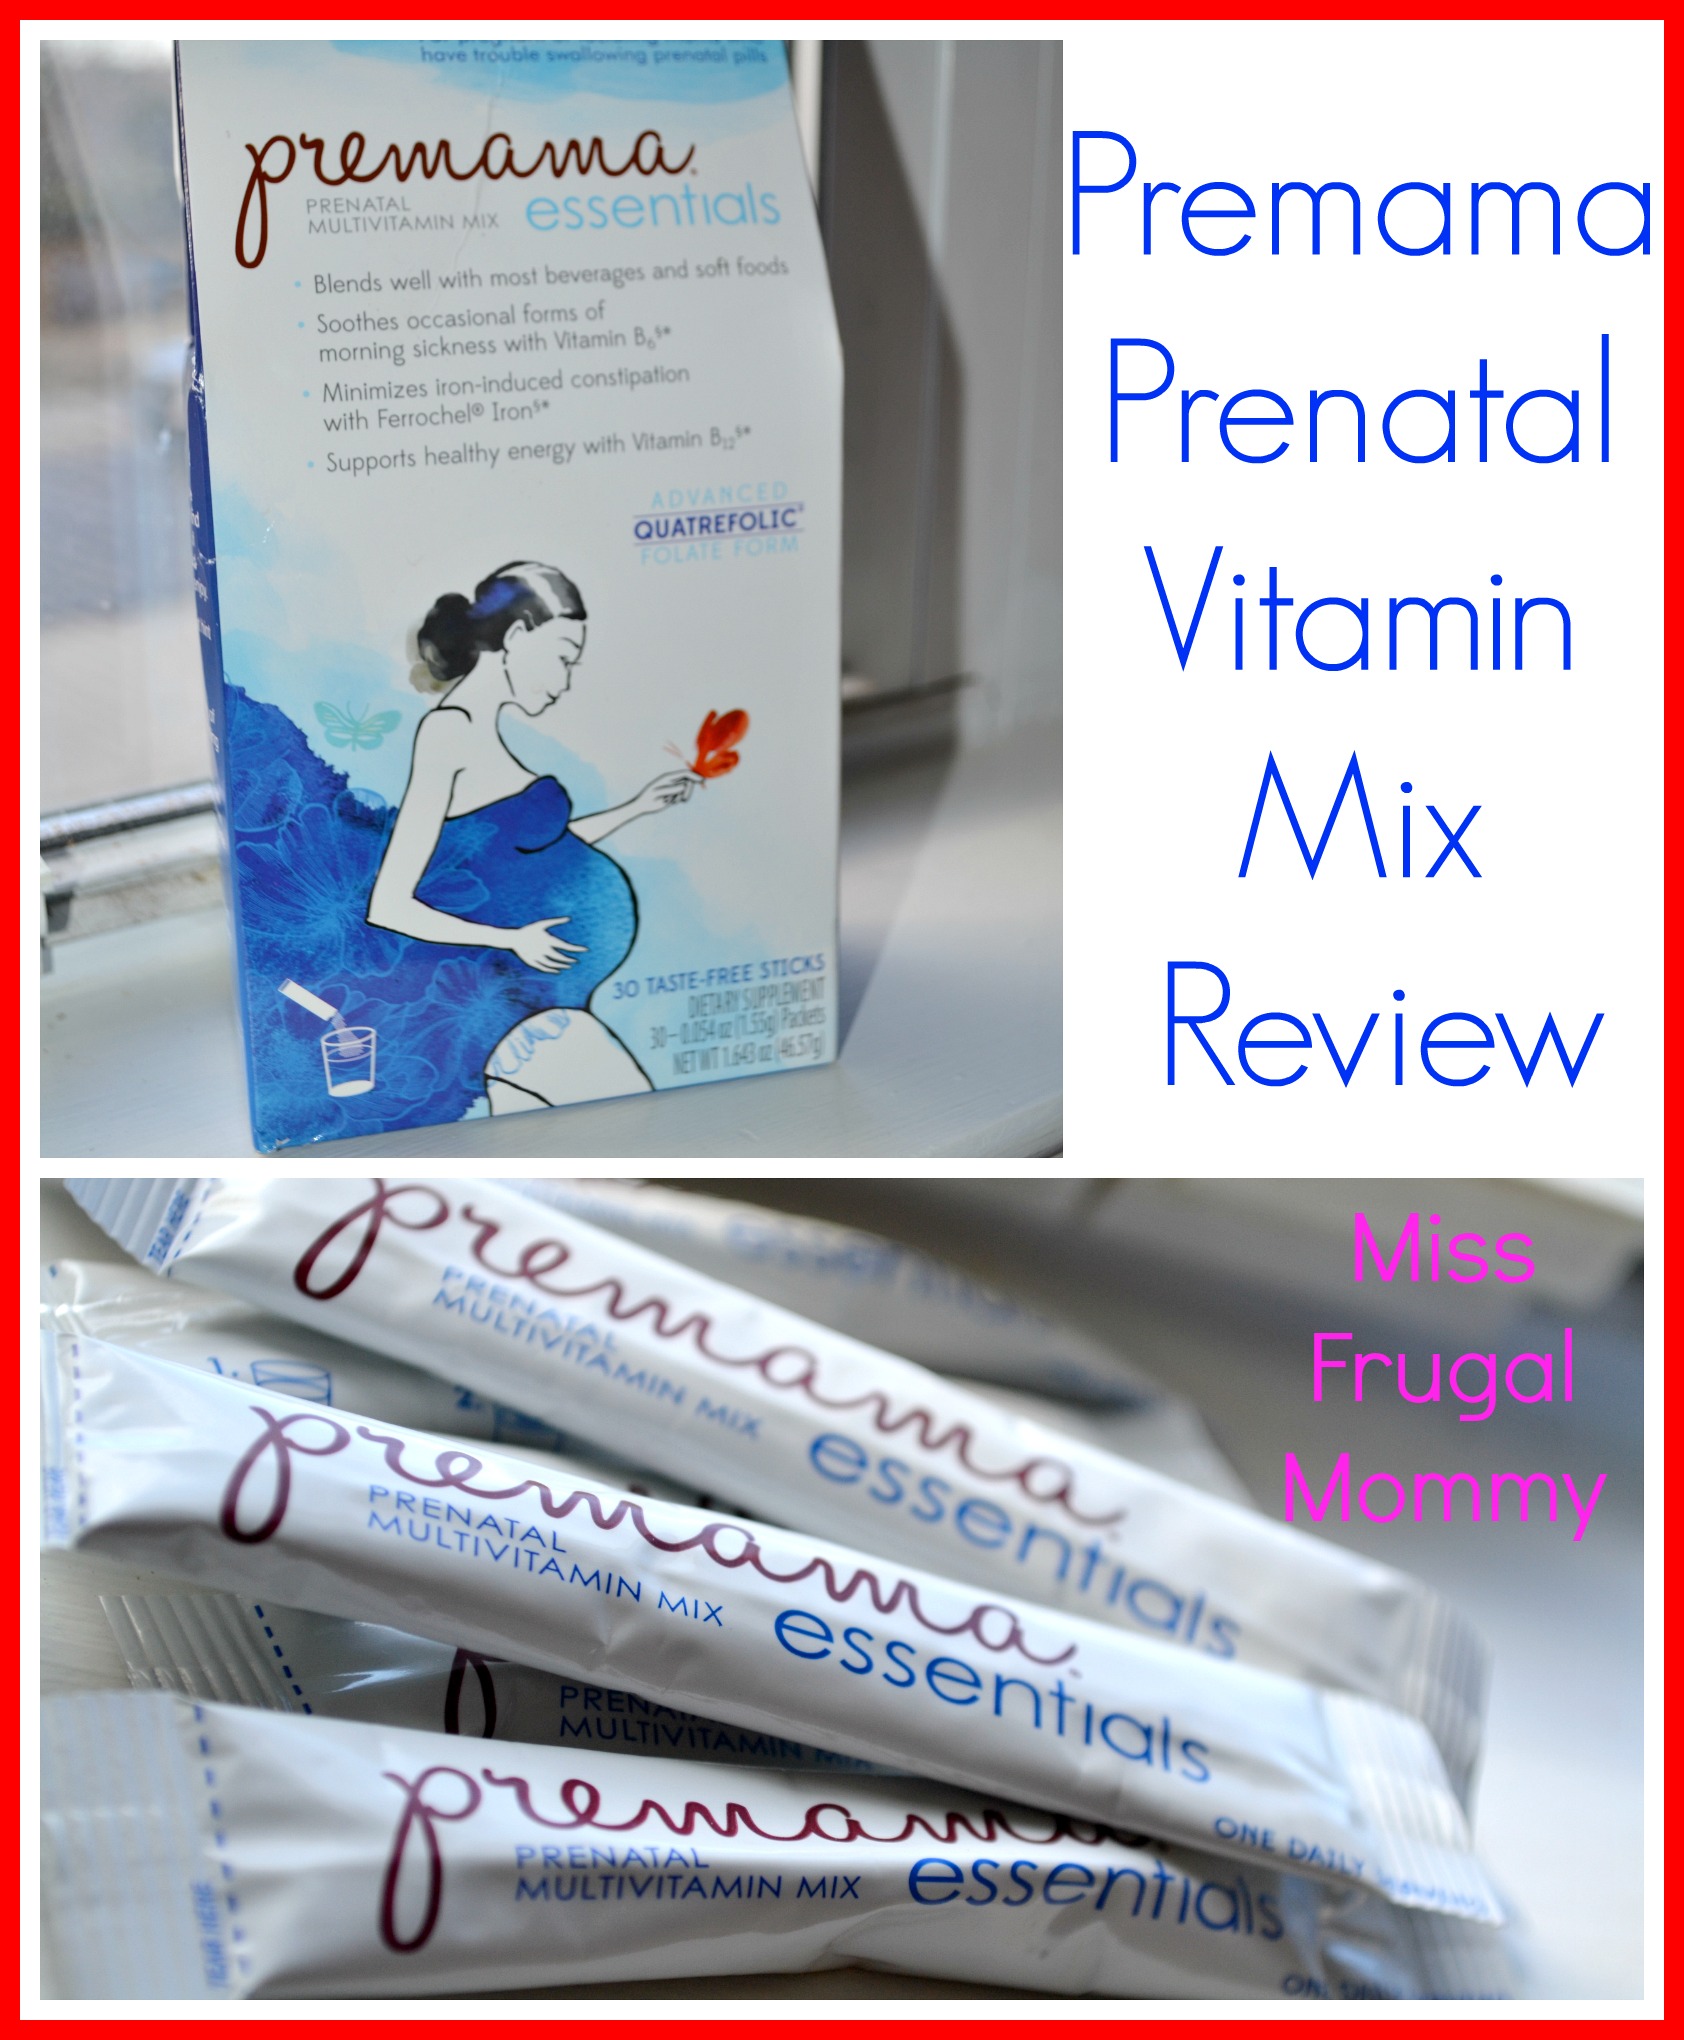 Premama Prenatal Vitamin Mix Review